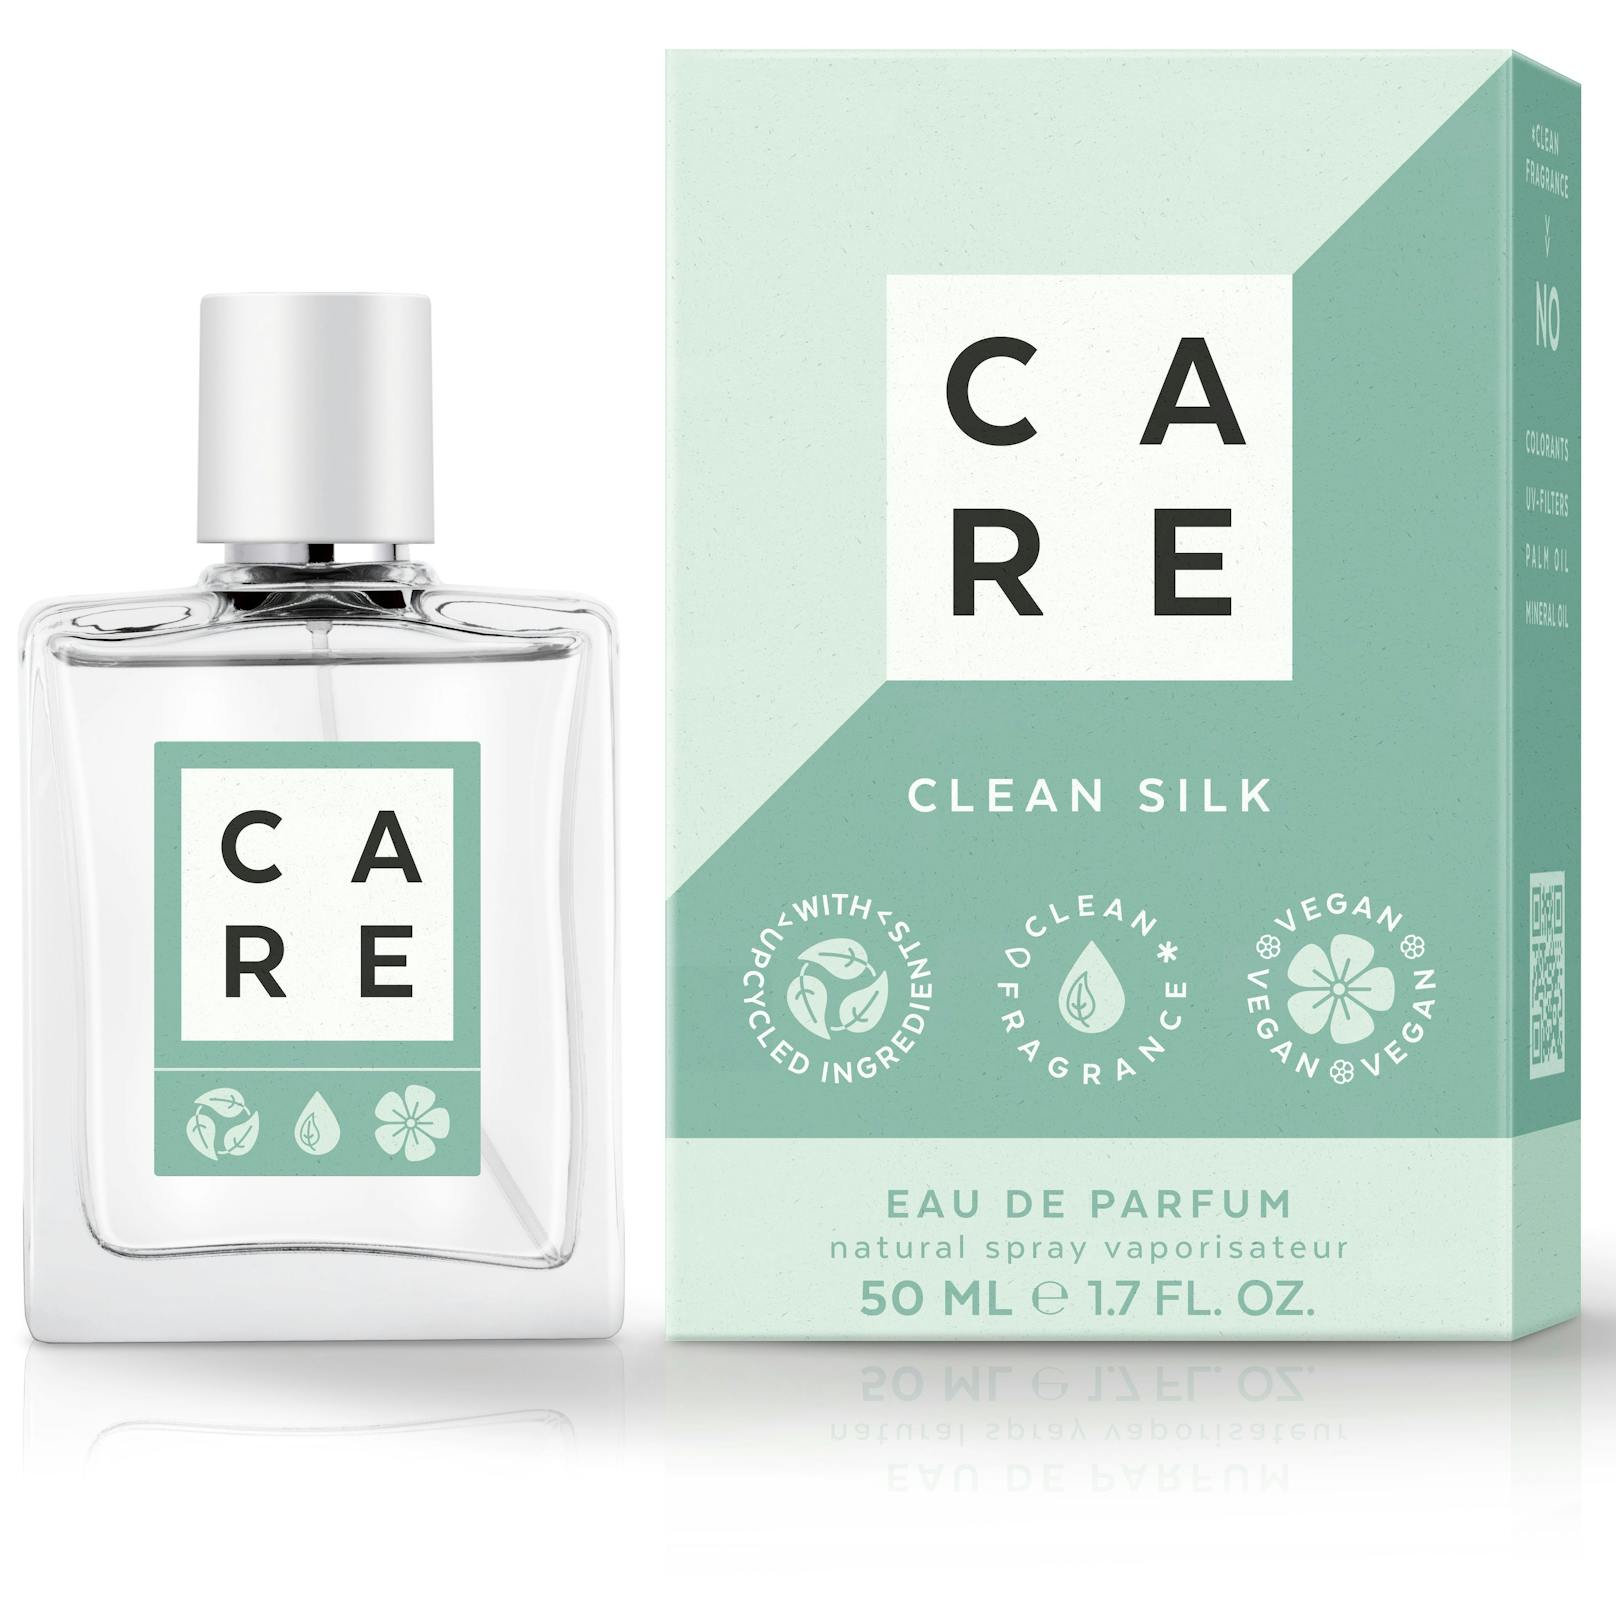 Flakon-Box "Clean Silk" von CARE Fragrances